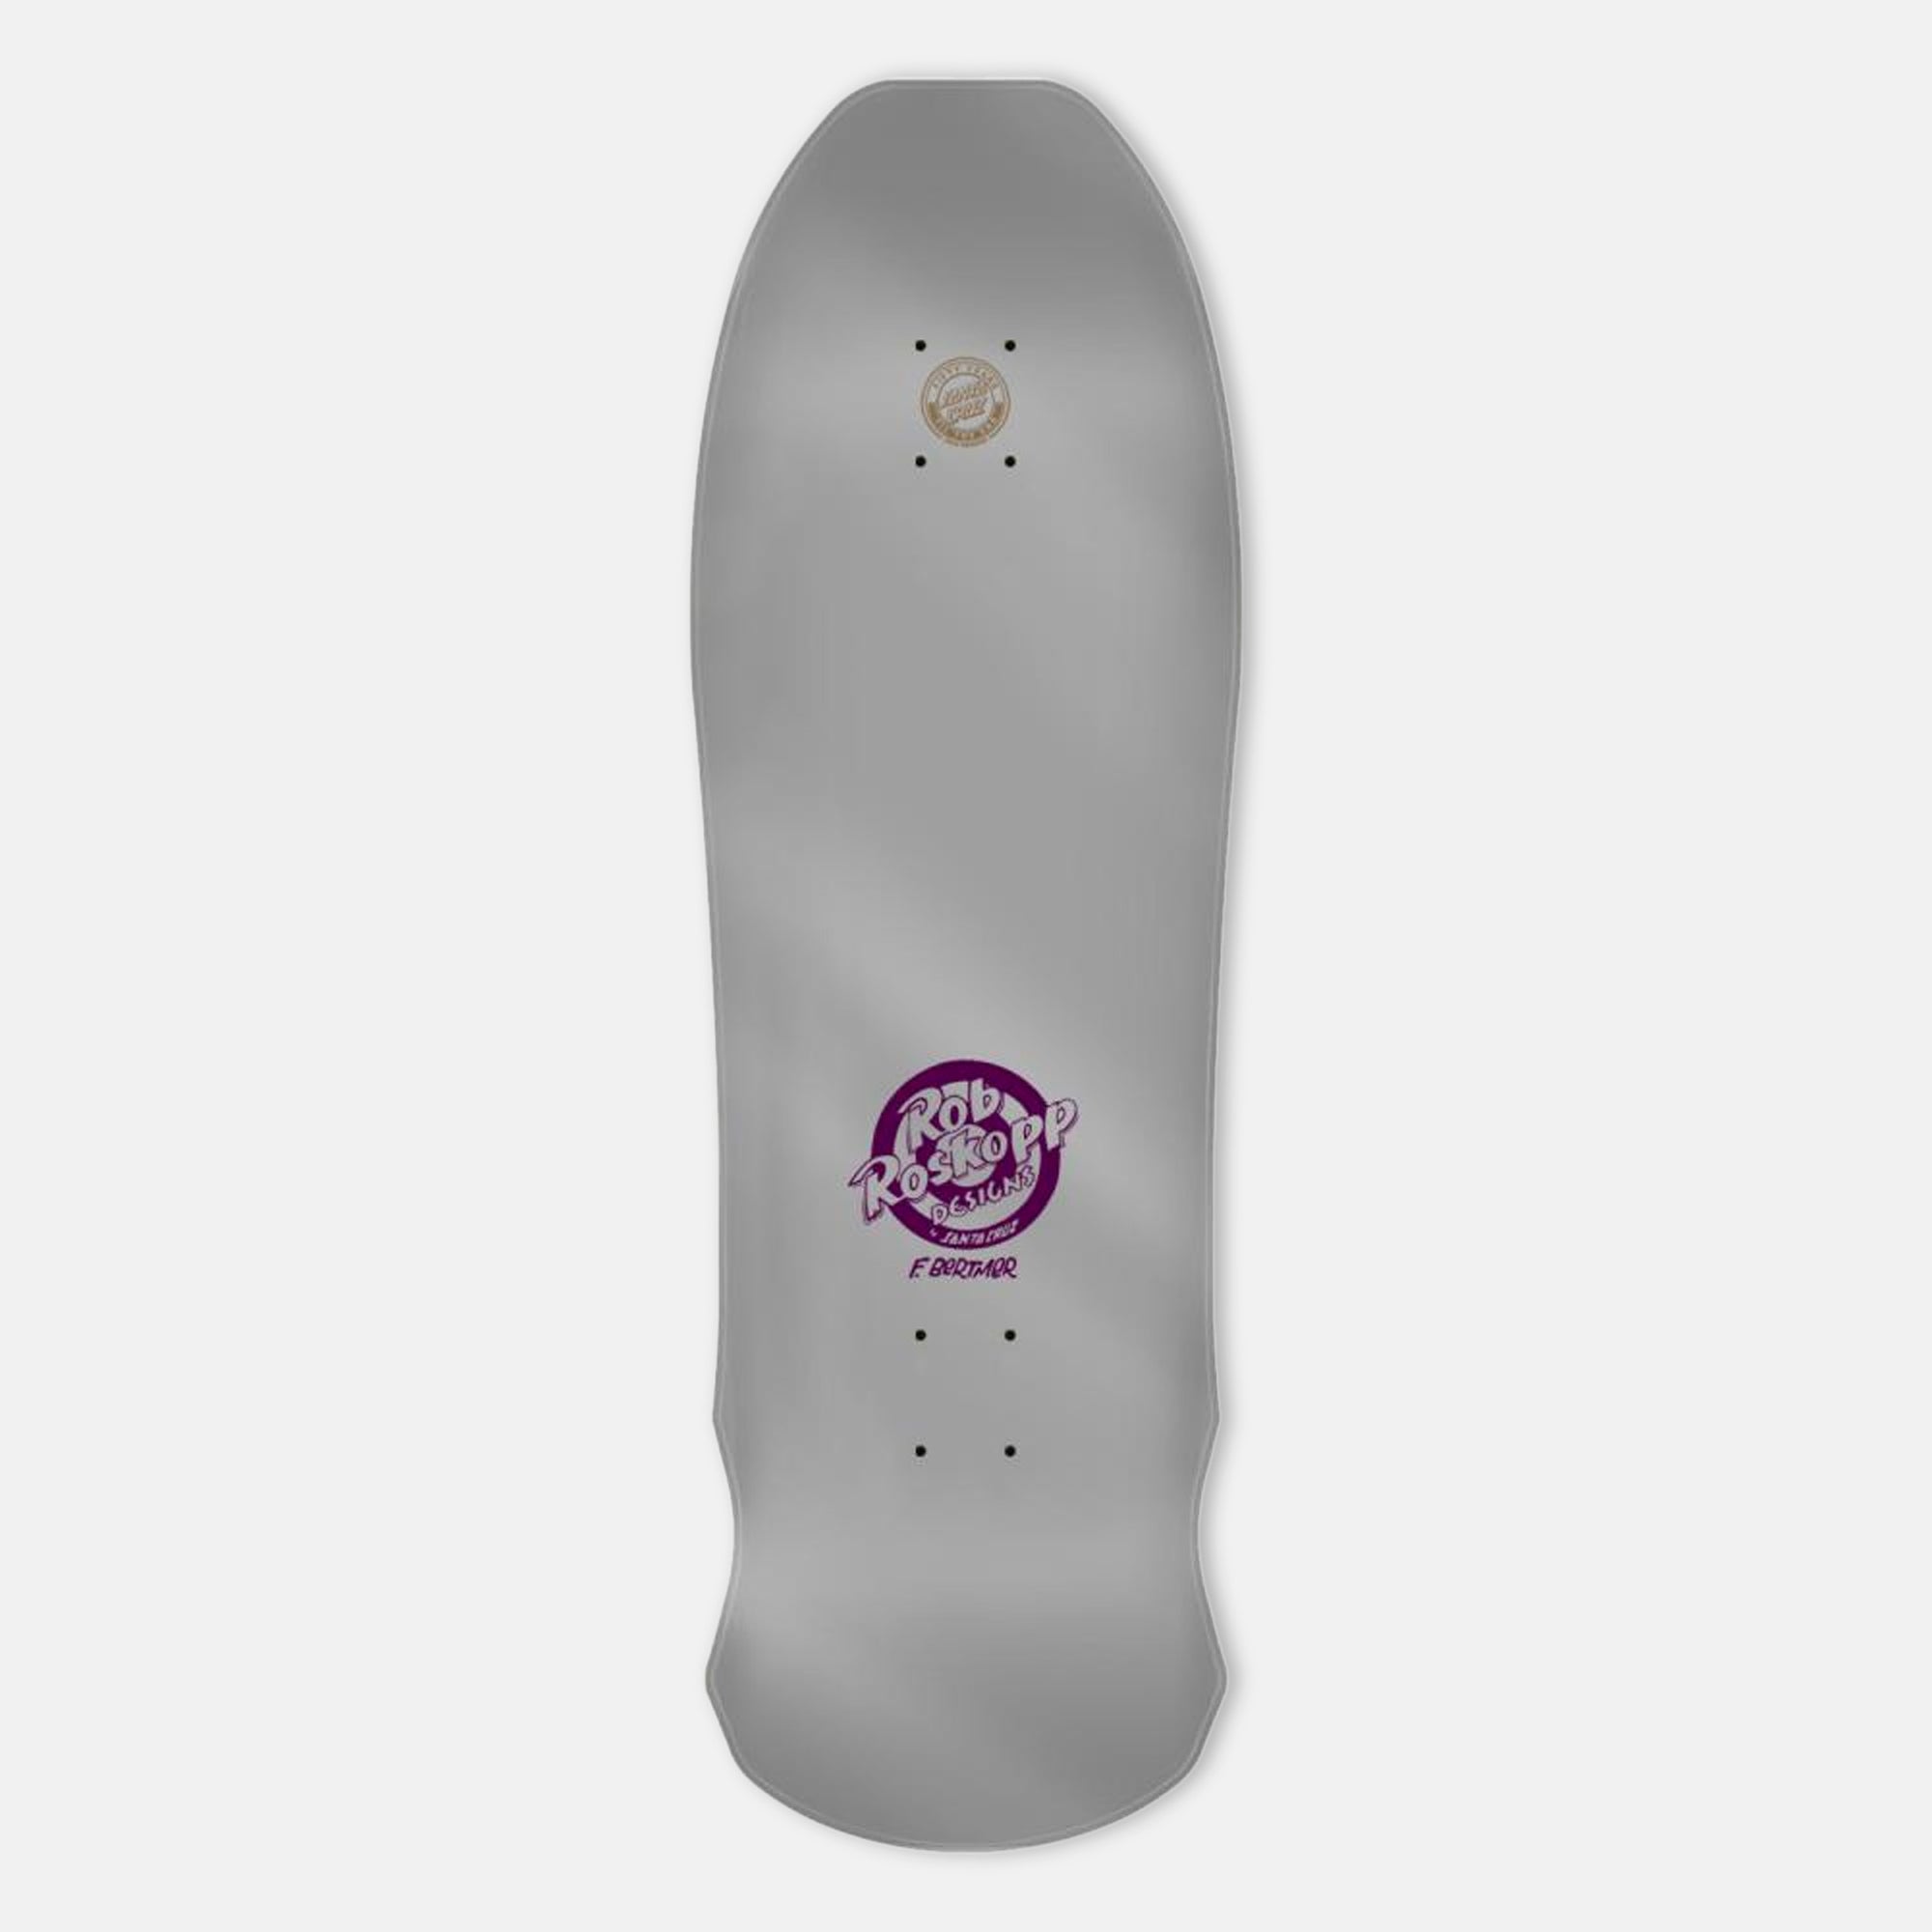 Santa Cruz - 9.5" Reissue Roskopp Face Florian Skateboard Deck